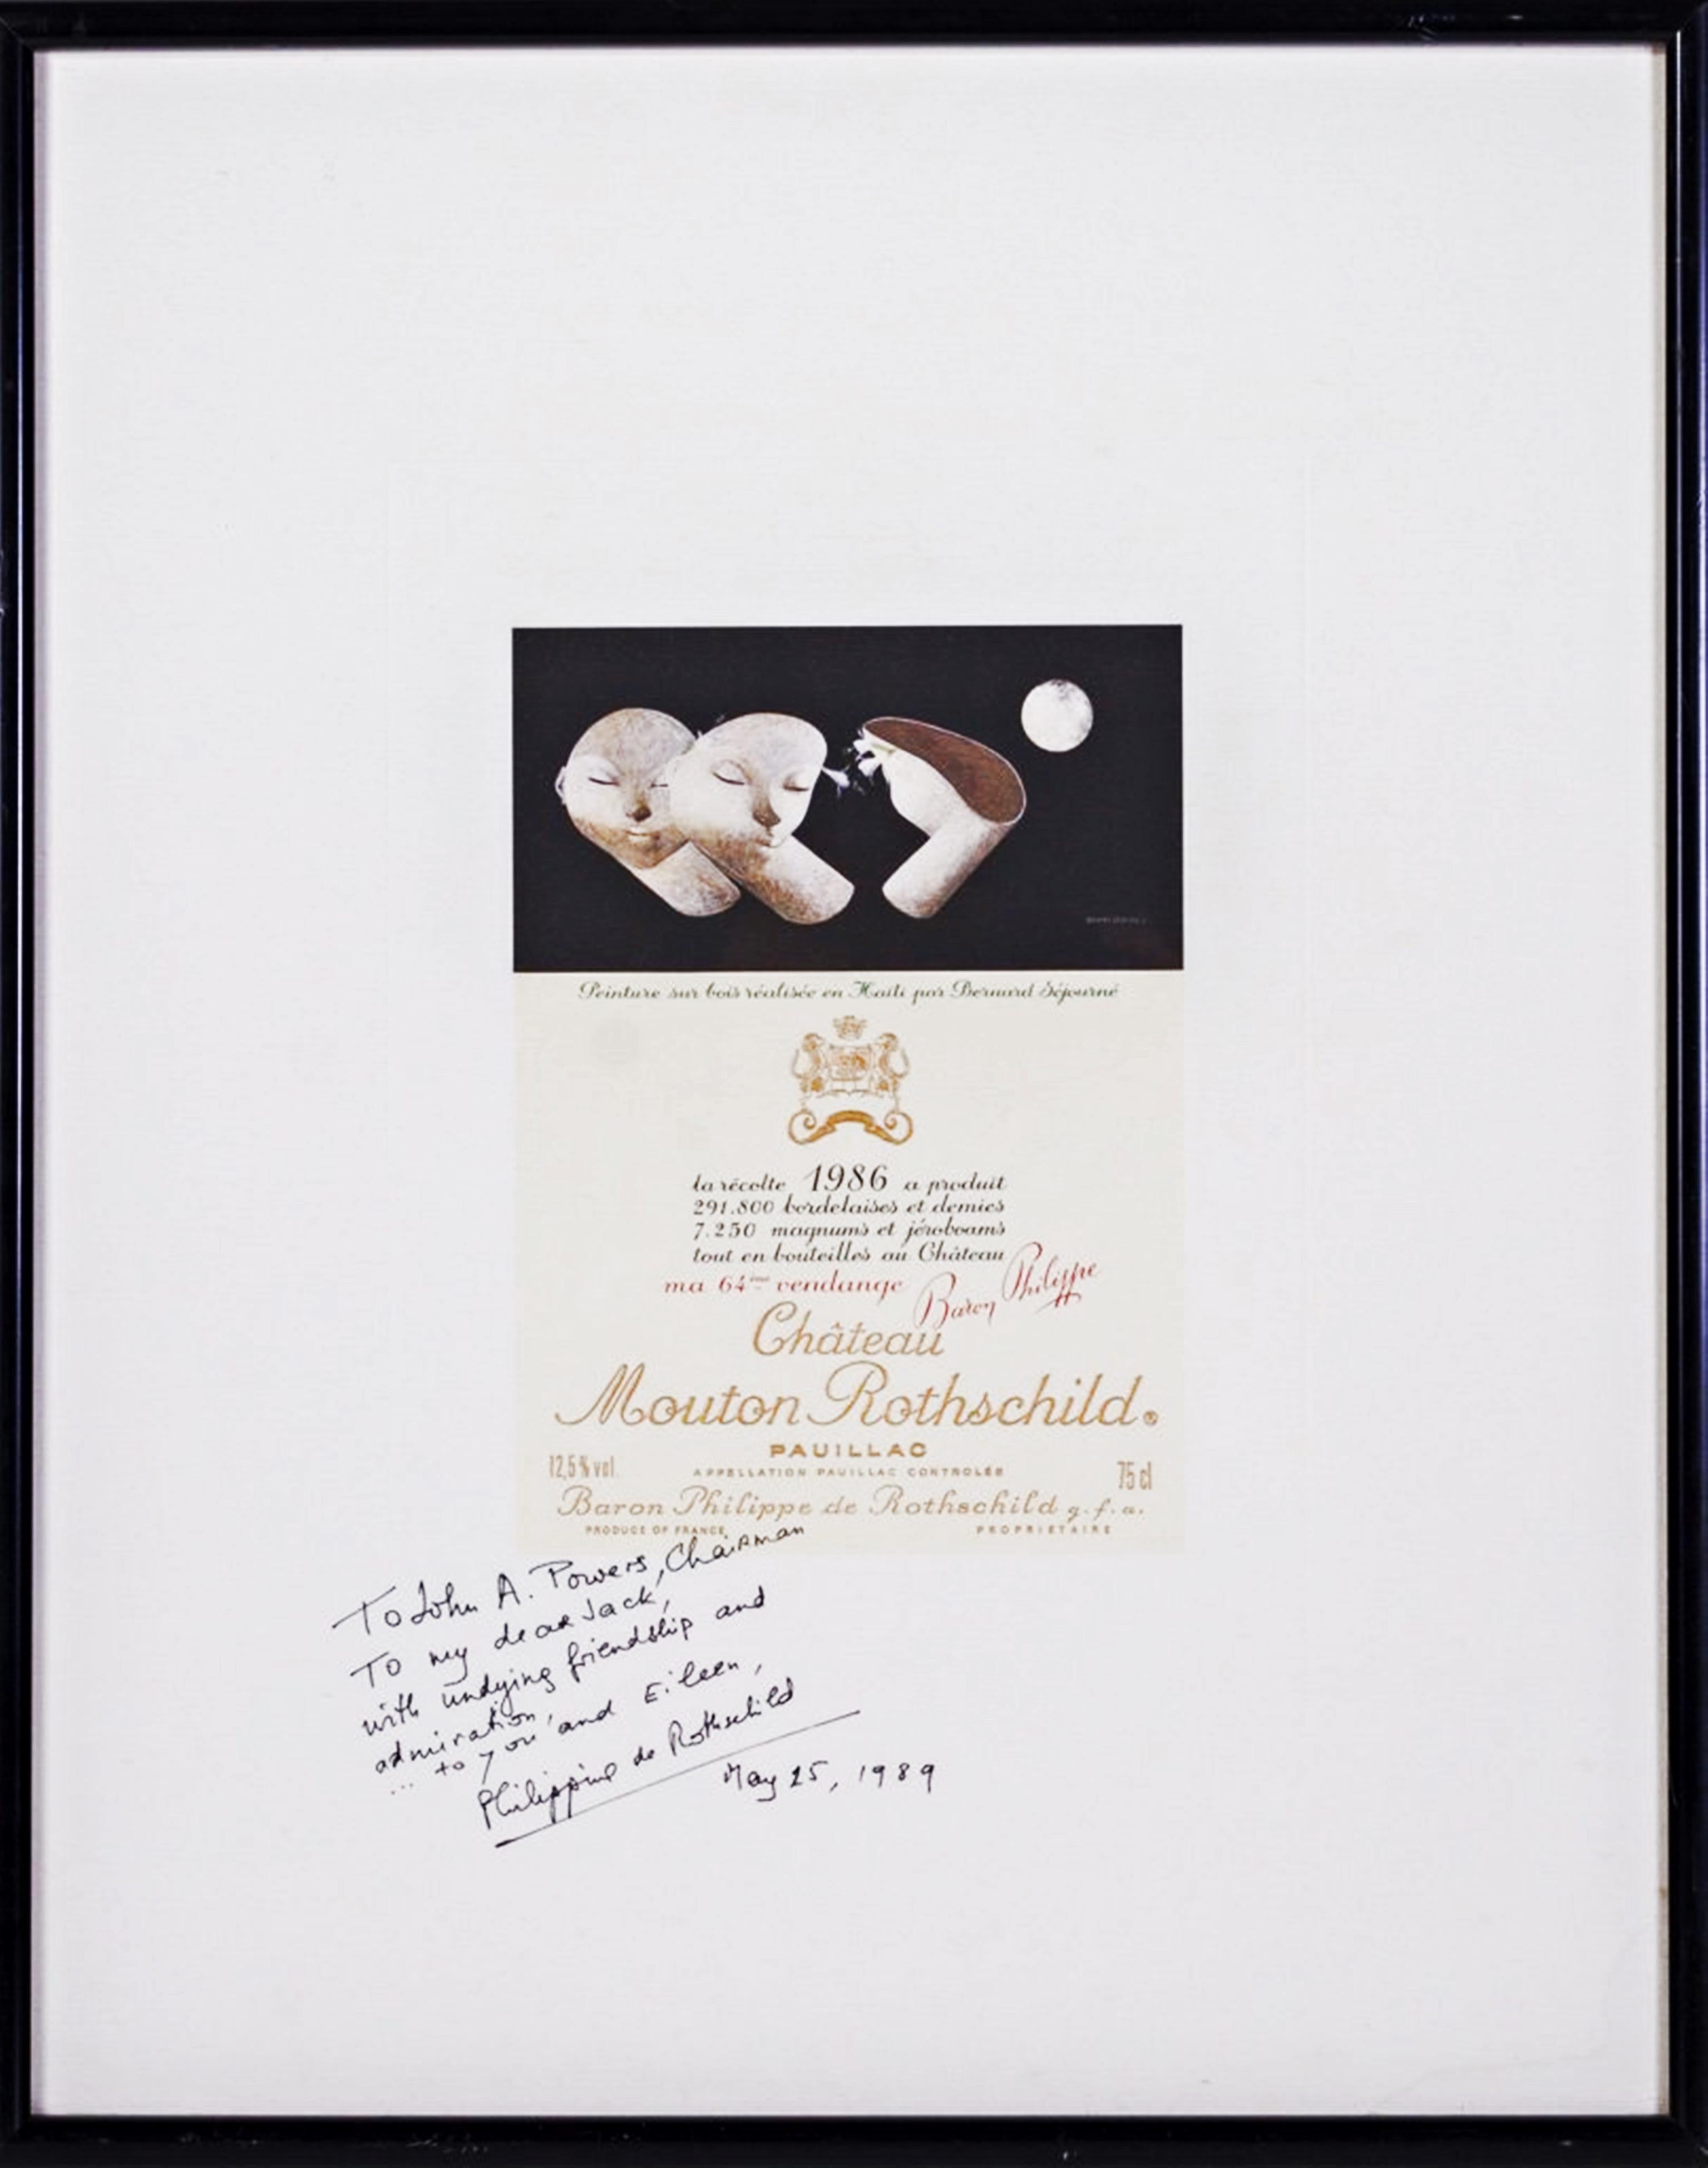 Chateau Mouton Rothschild Wine Label Signed & inscribed Philippine de Rothschild - Print by Bernard Séjourné